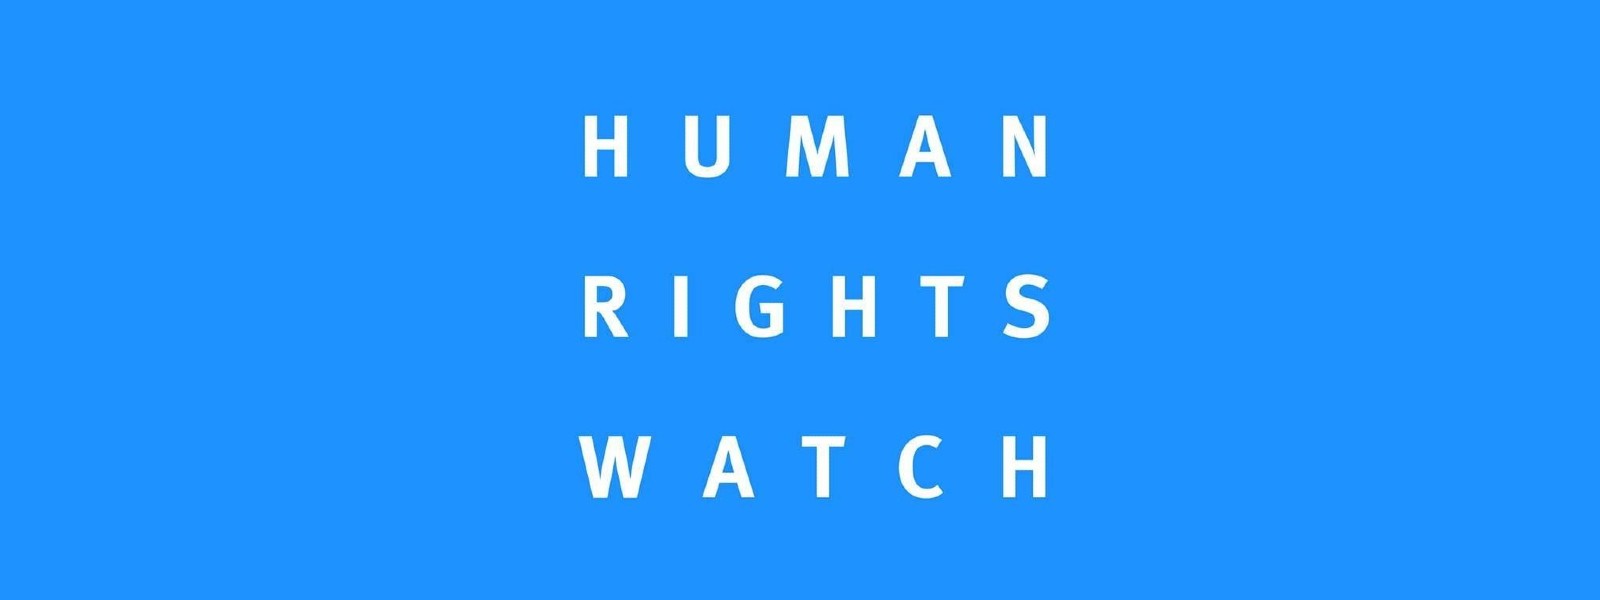 UN Paints Bleak Picture of Rights in Sri Lanka – HRW